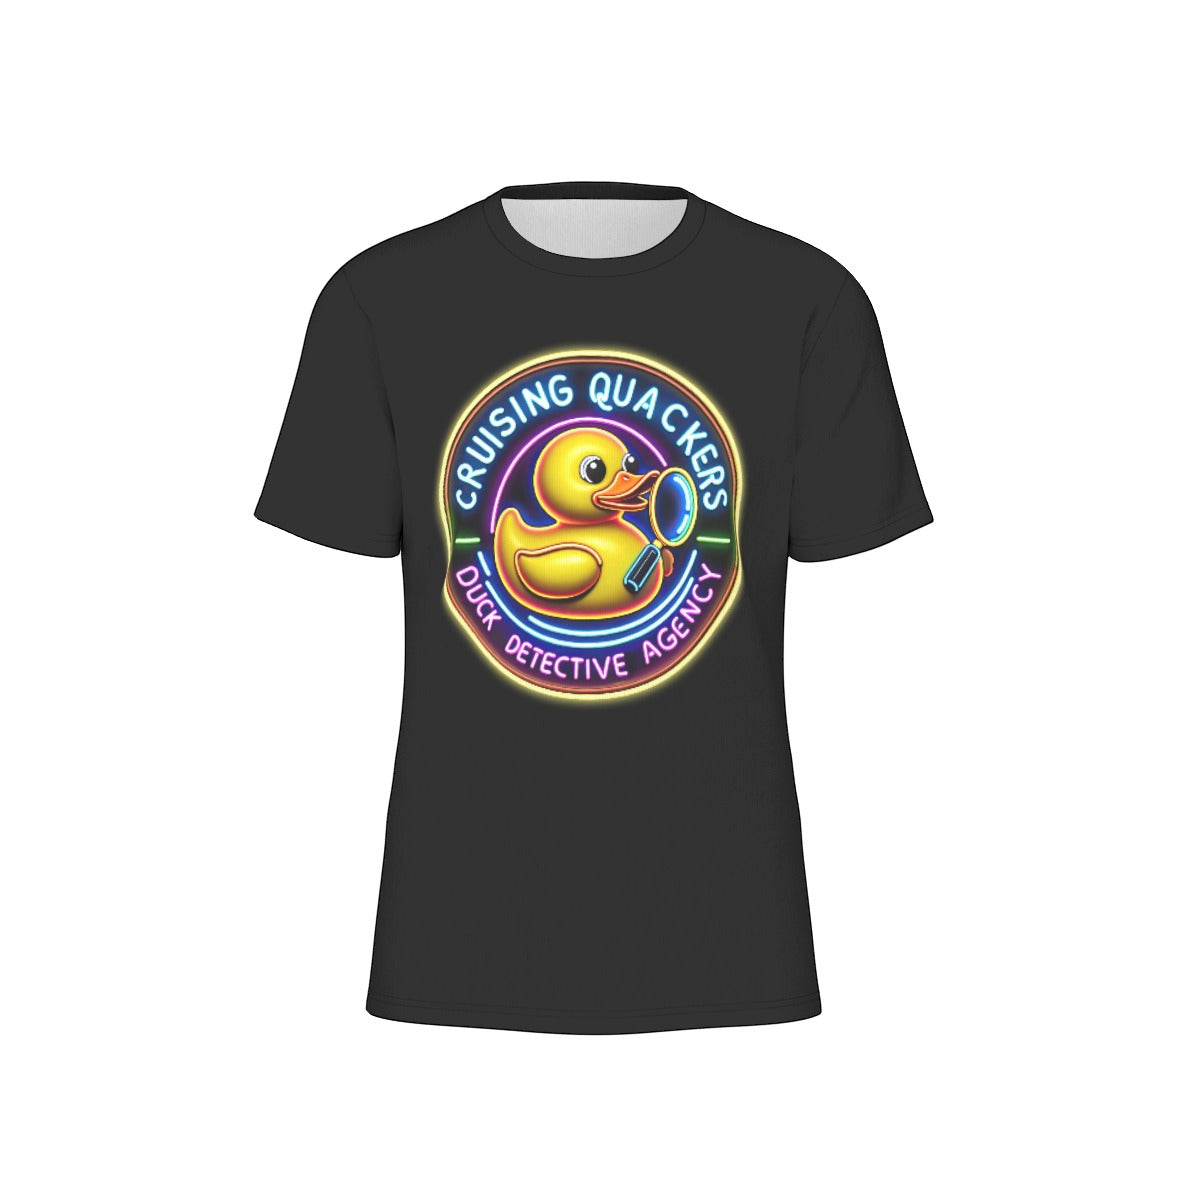 Cruising Quackers Duck Detective Agency T-Shirt